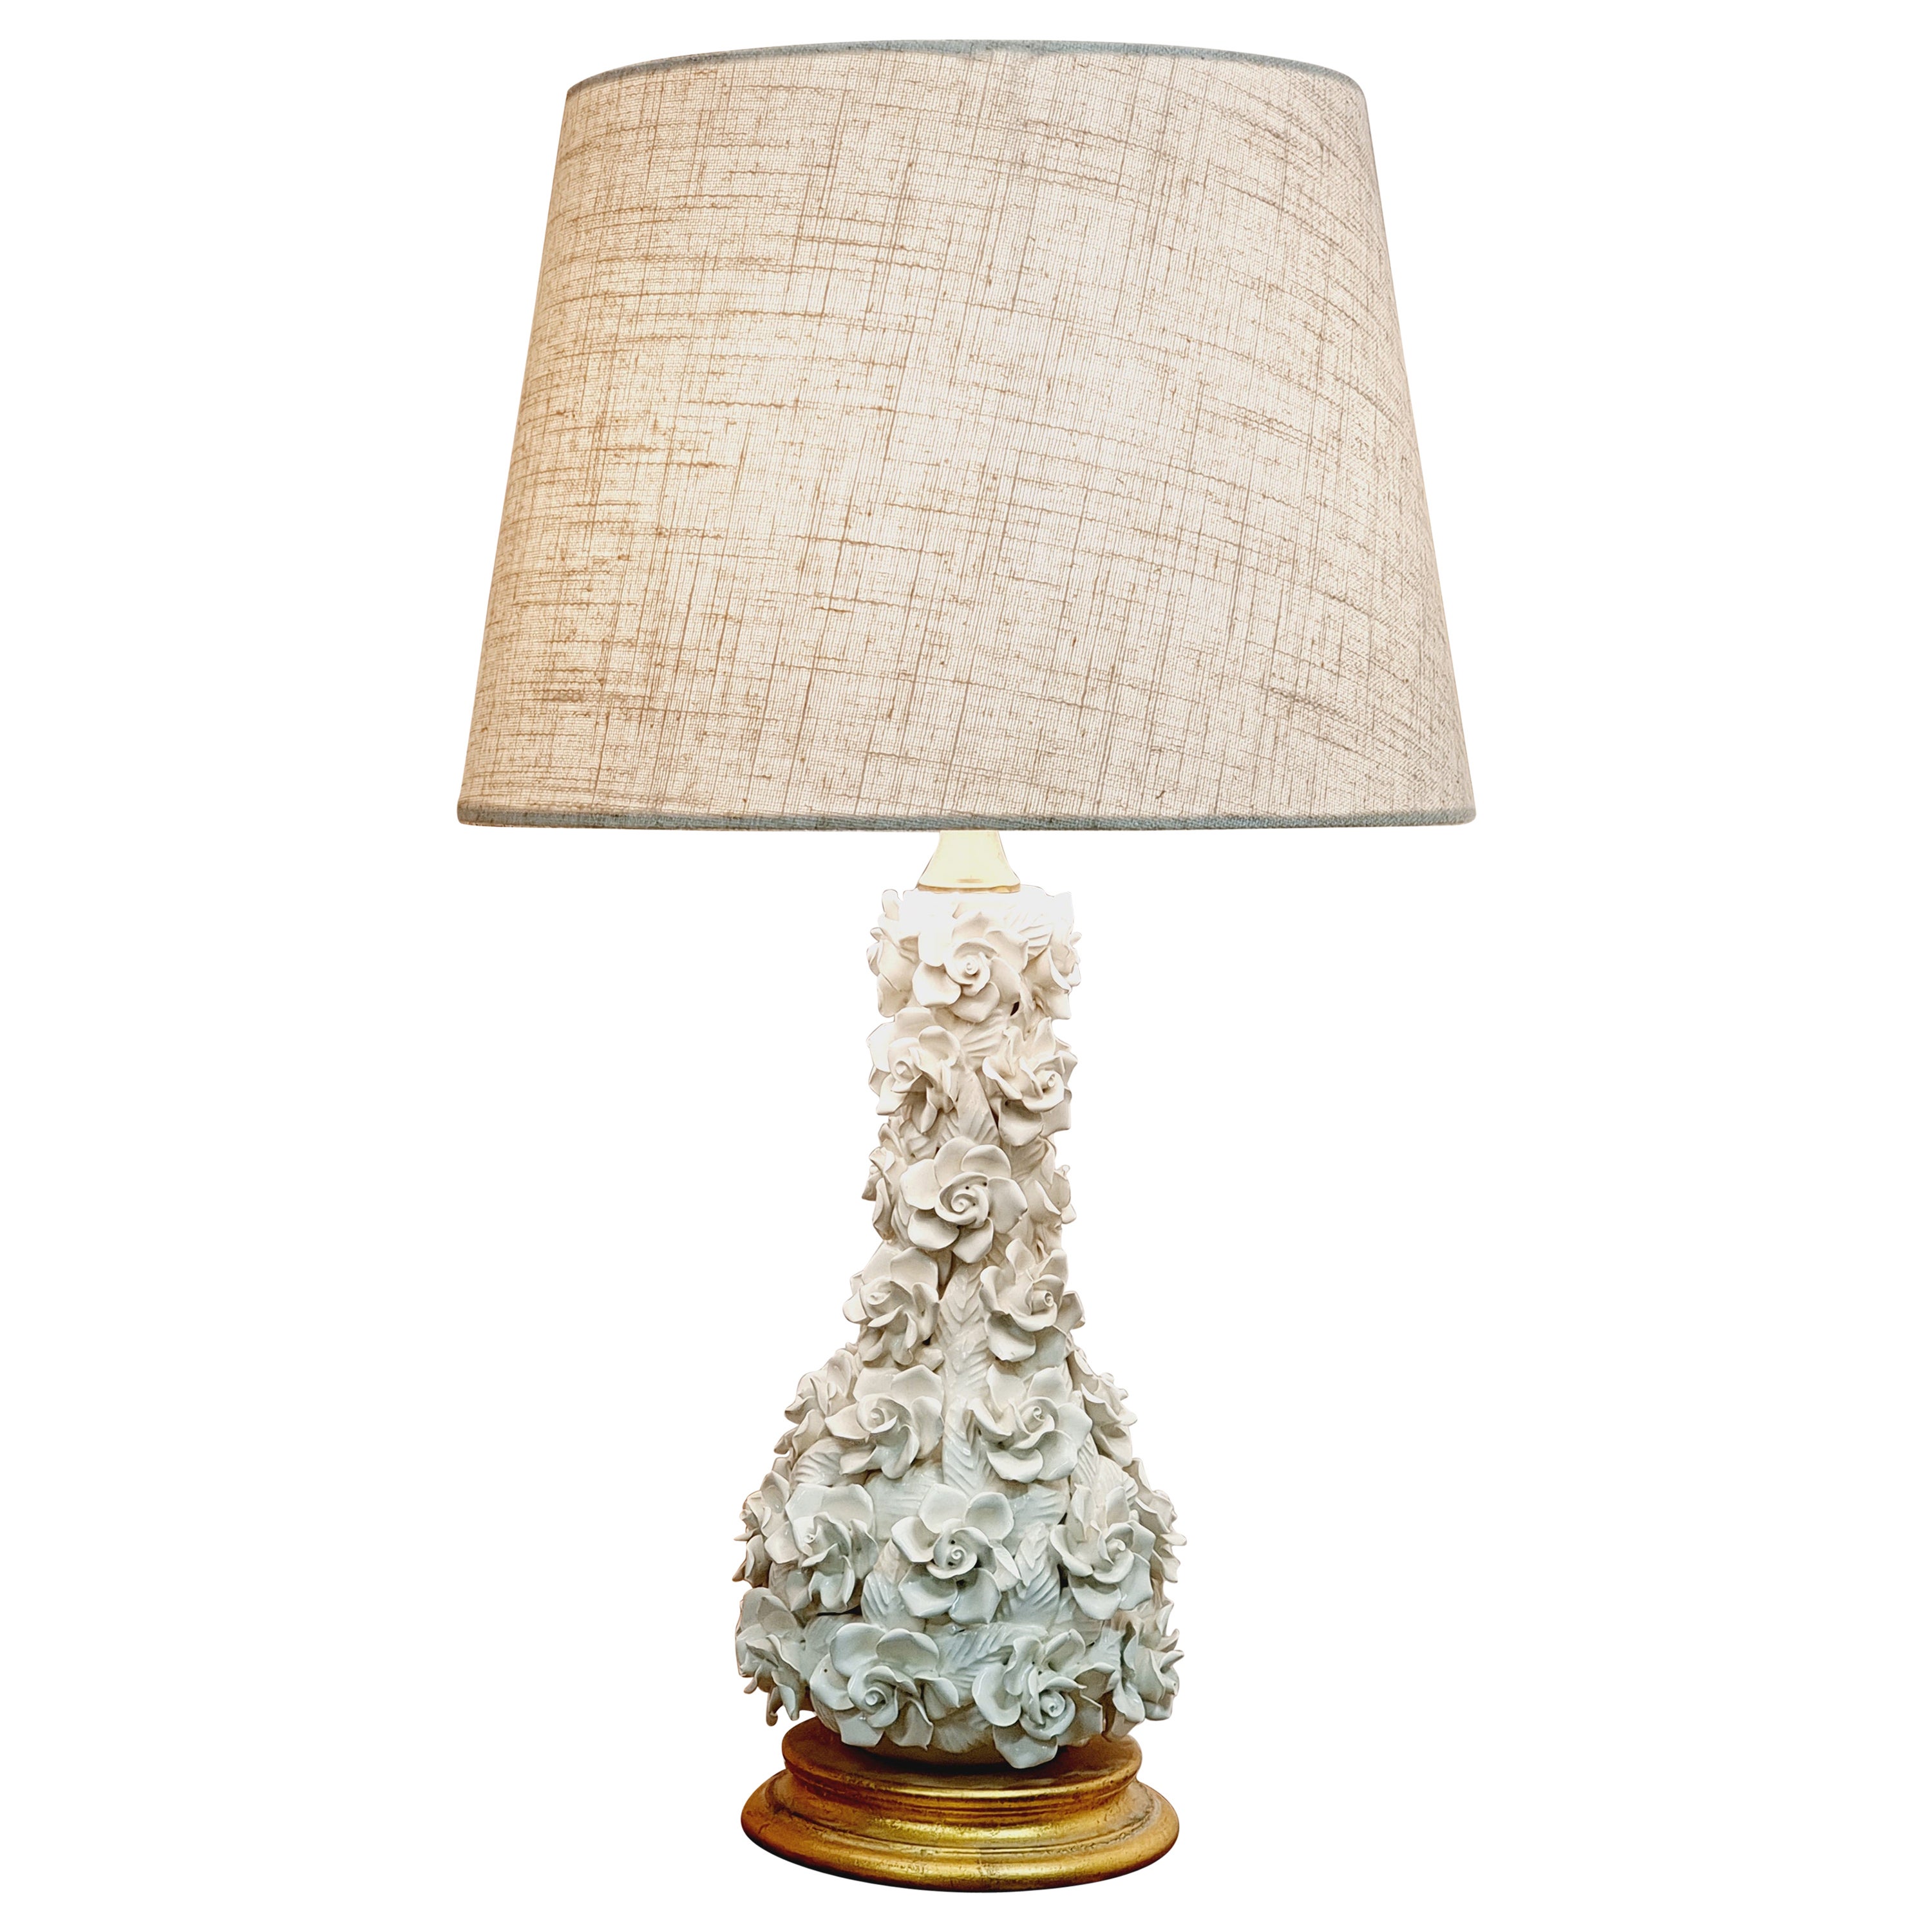 Handmade Ceramic Table Lamp with Flower Decor, Midcentury / Hollywood Regency